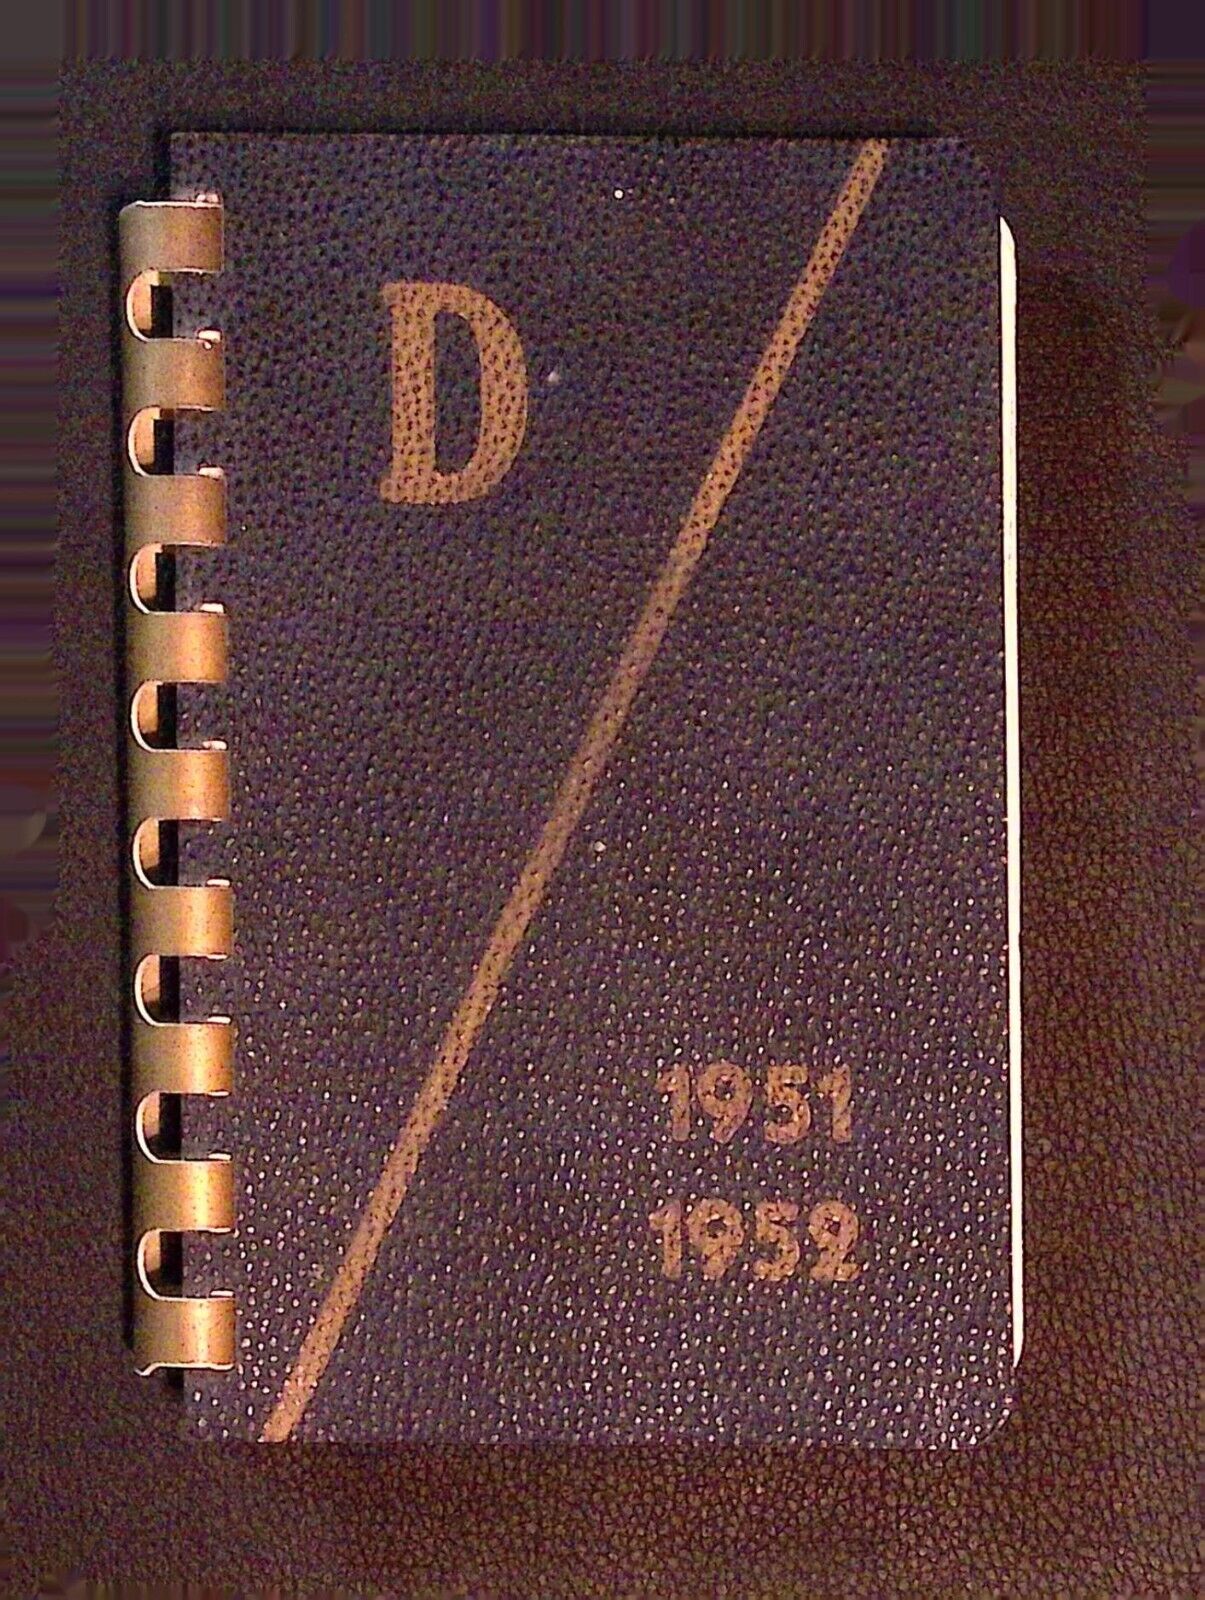 Drexel Institute of Technology Student Handbook 1951